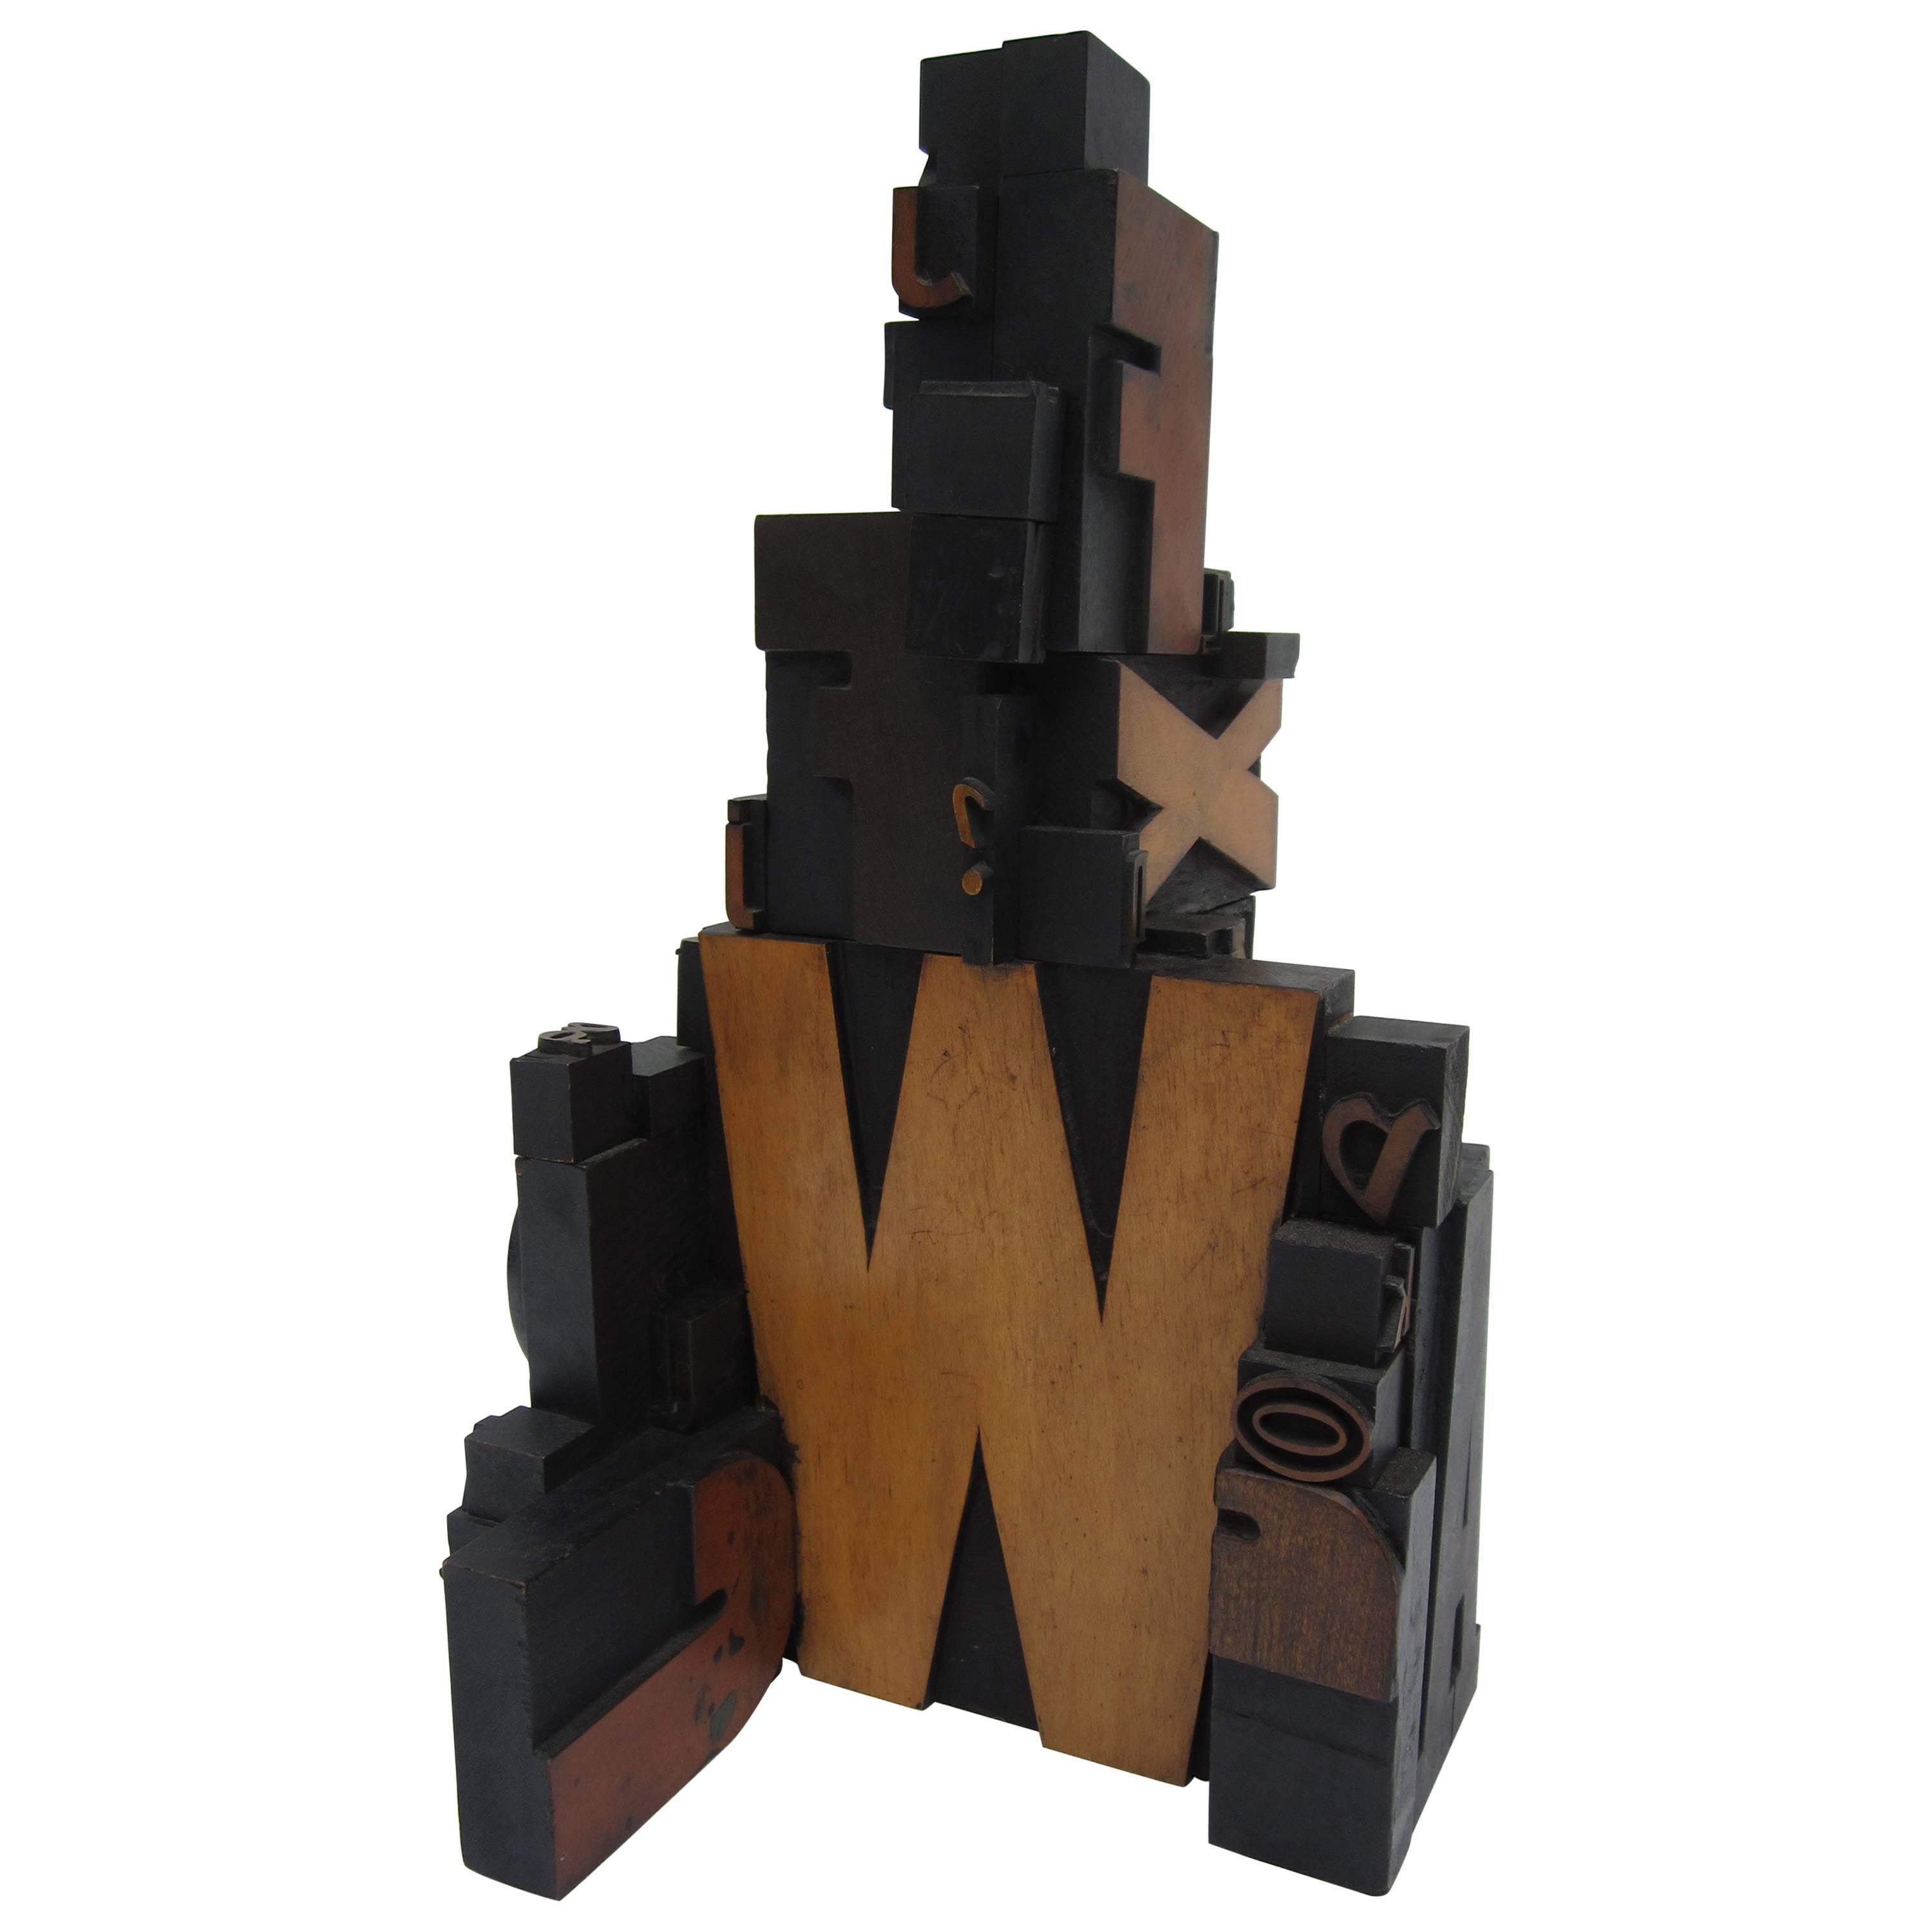 Letterpress Wood Block Sculpture